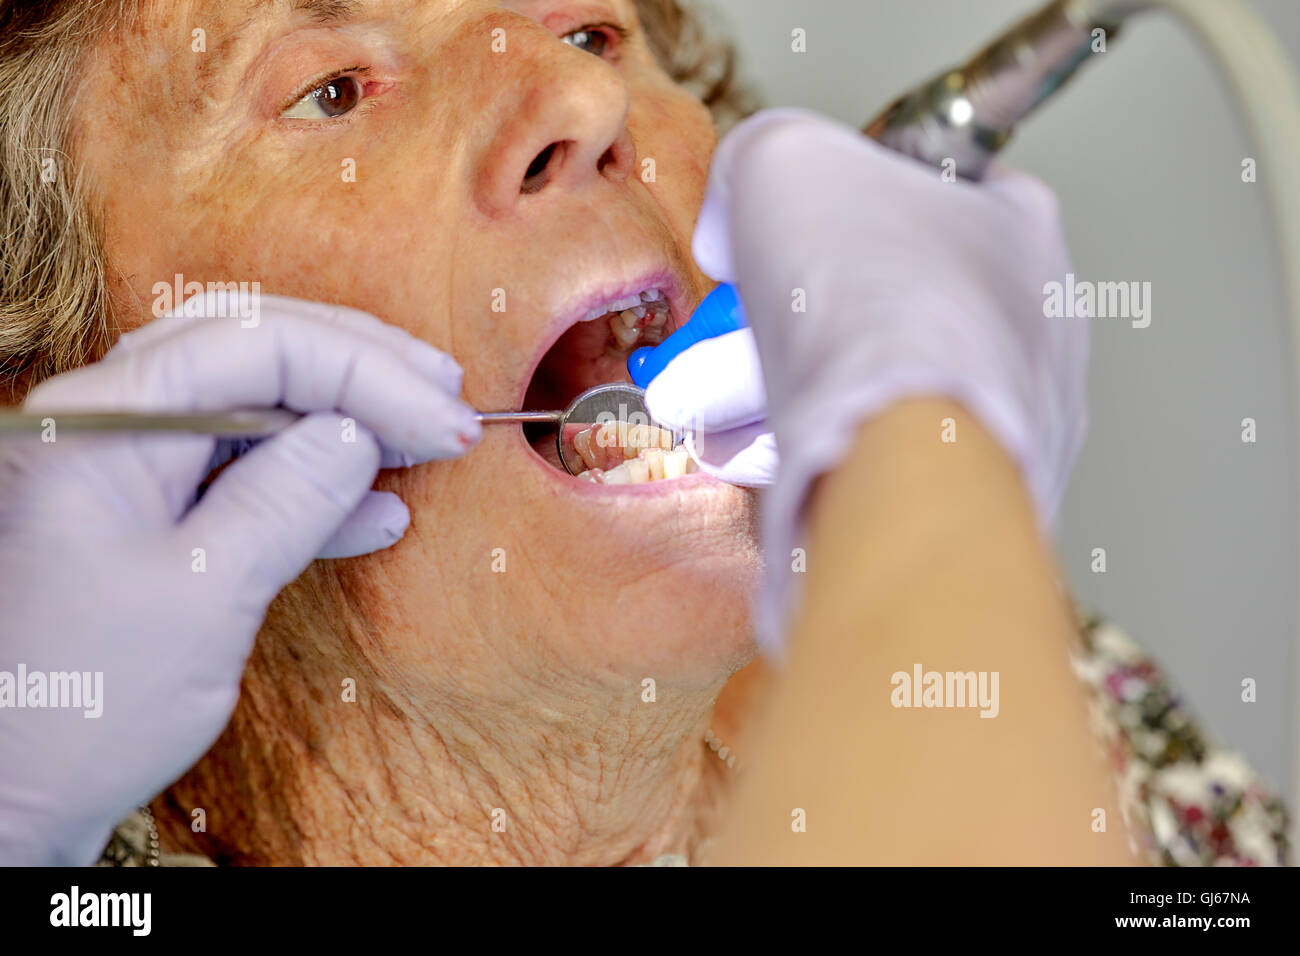 Elderly woman having her teeth cleaned by a dental hygienist Stock Photo